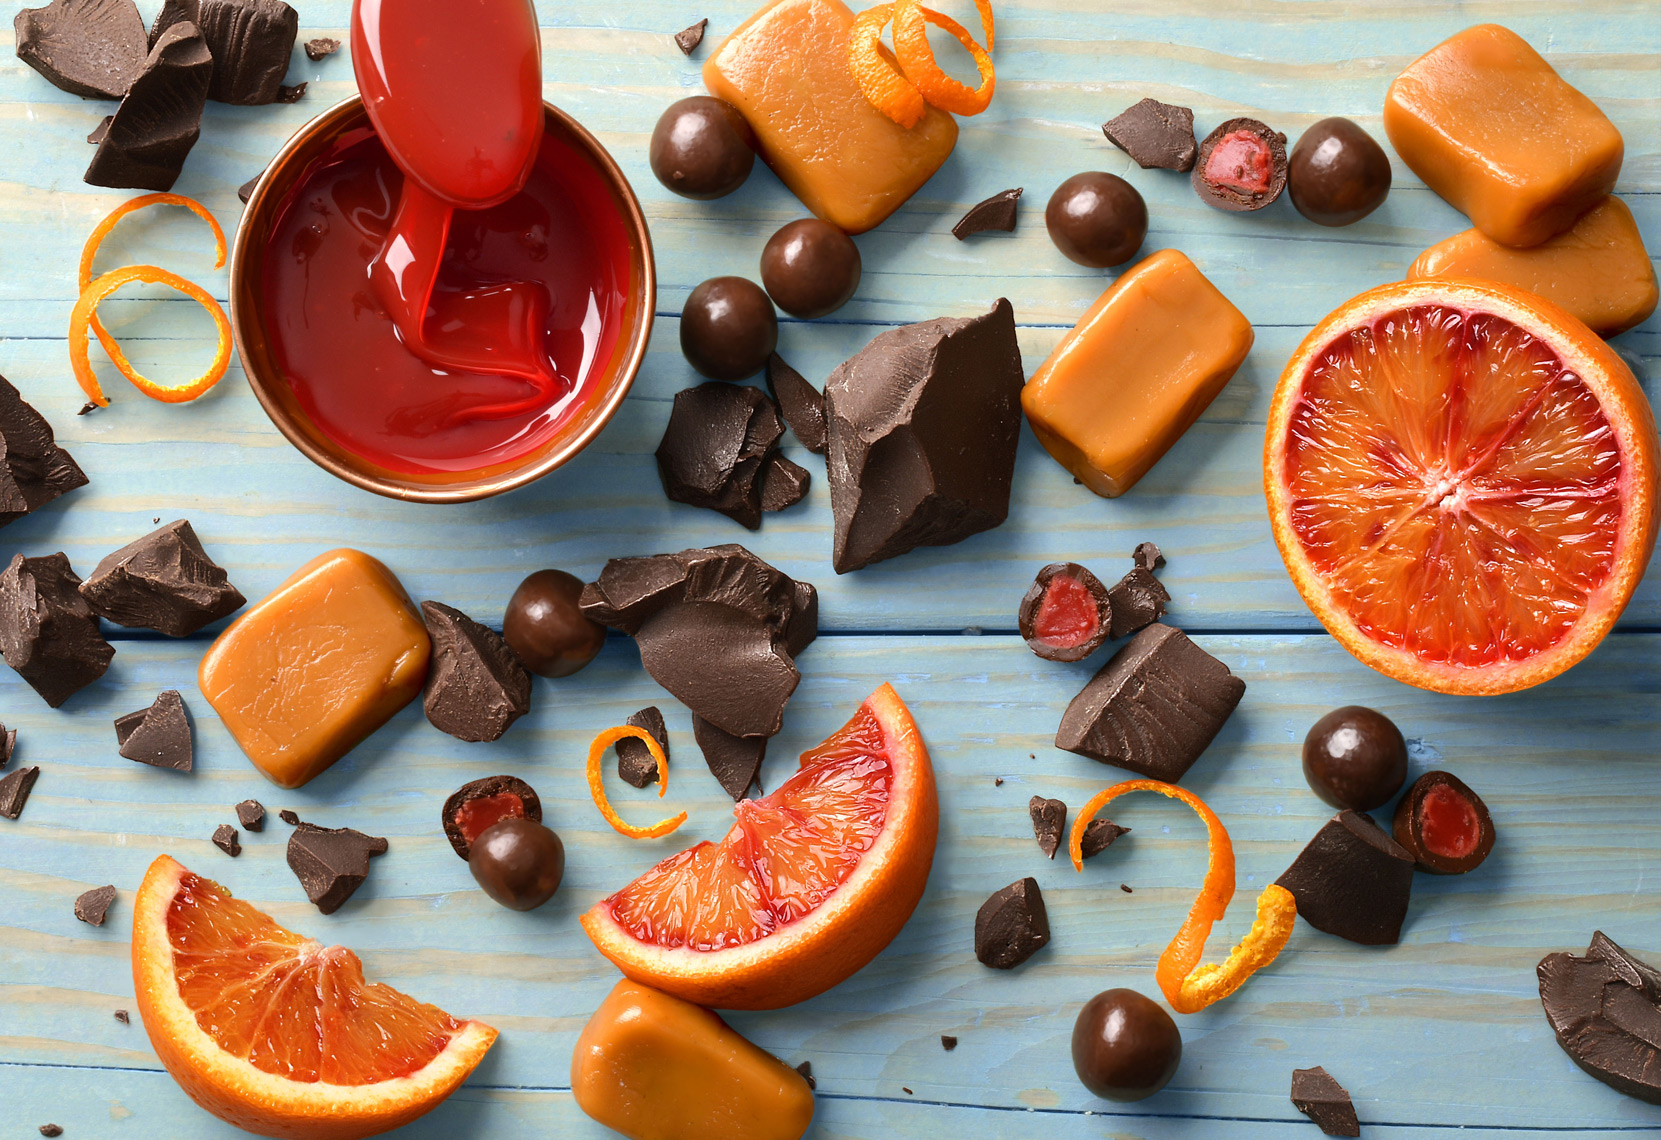 mike wepplo photoreal photography orange slices with caramel and chocolates